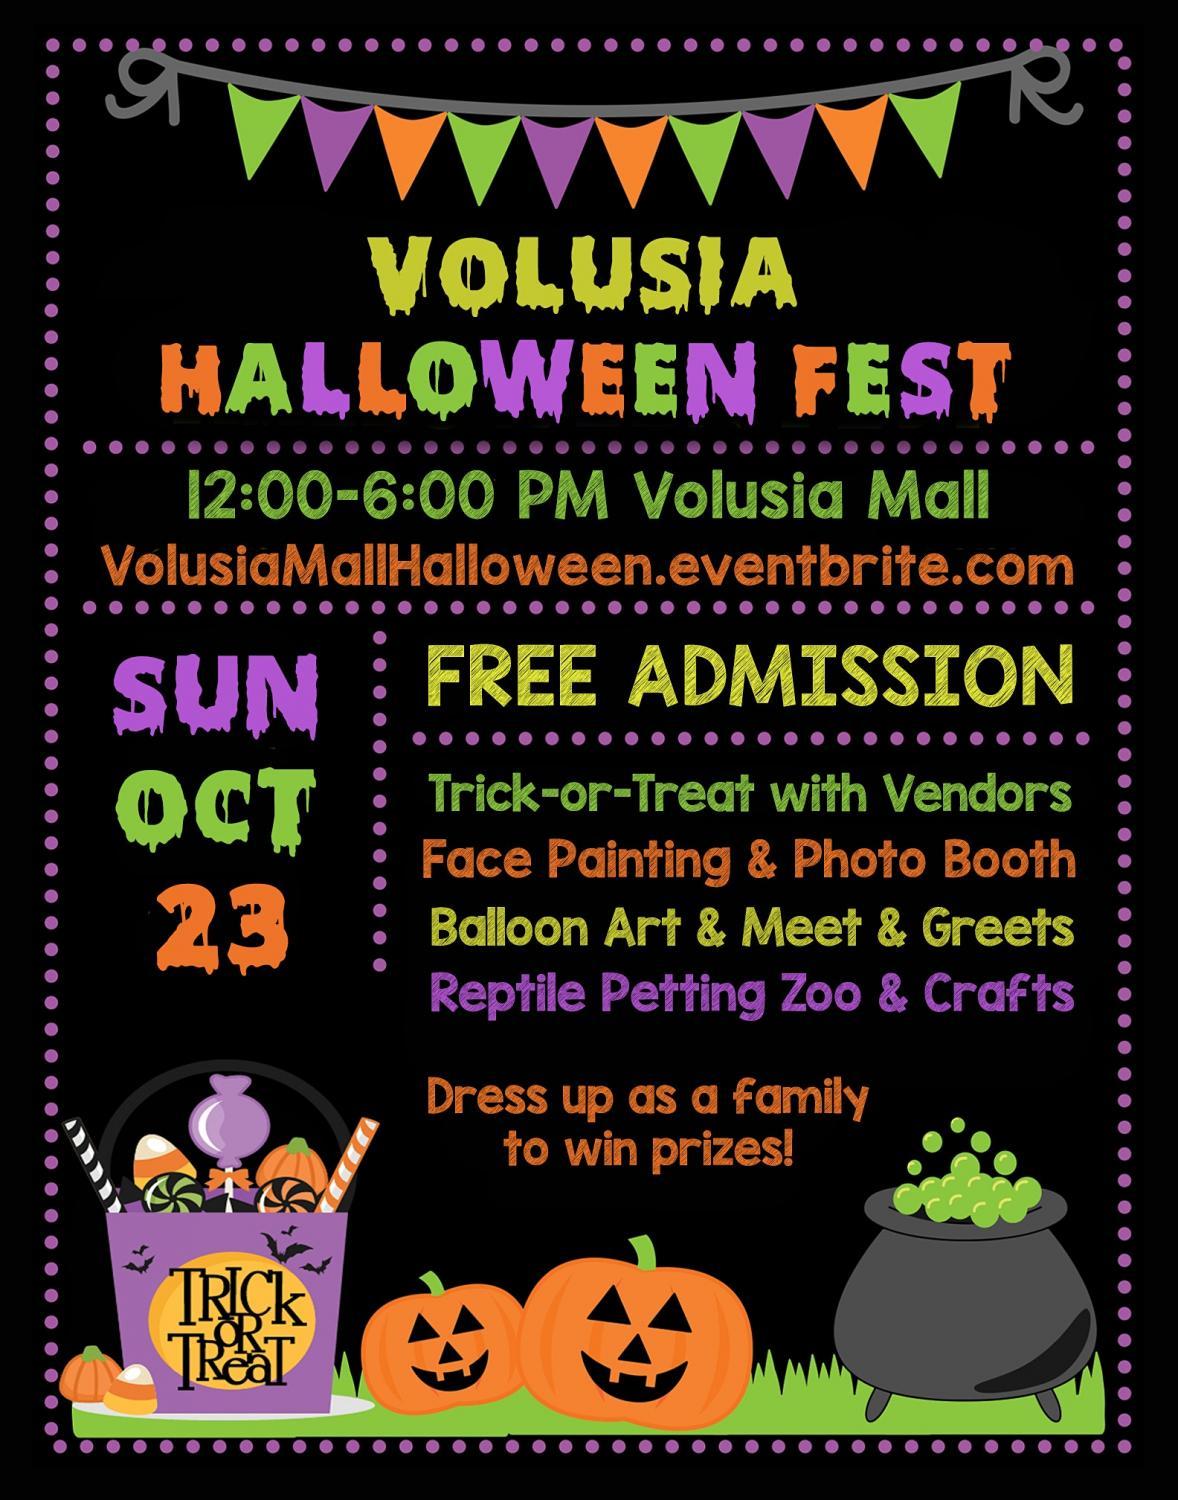 Volusia Halloween Fest
Sun Oct 23, 12:00 PM - Sun Oct 23, 6:00 PM
in 3 days